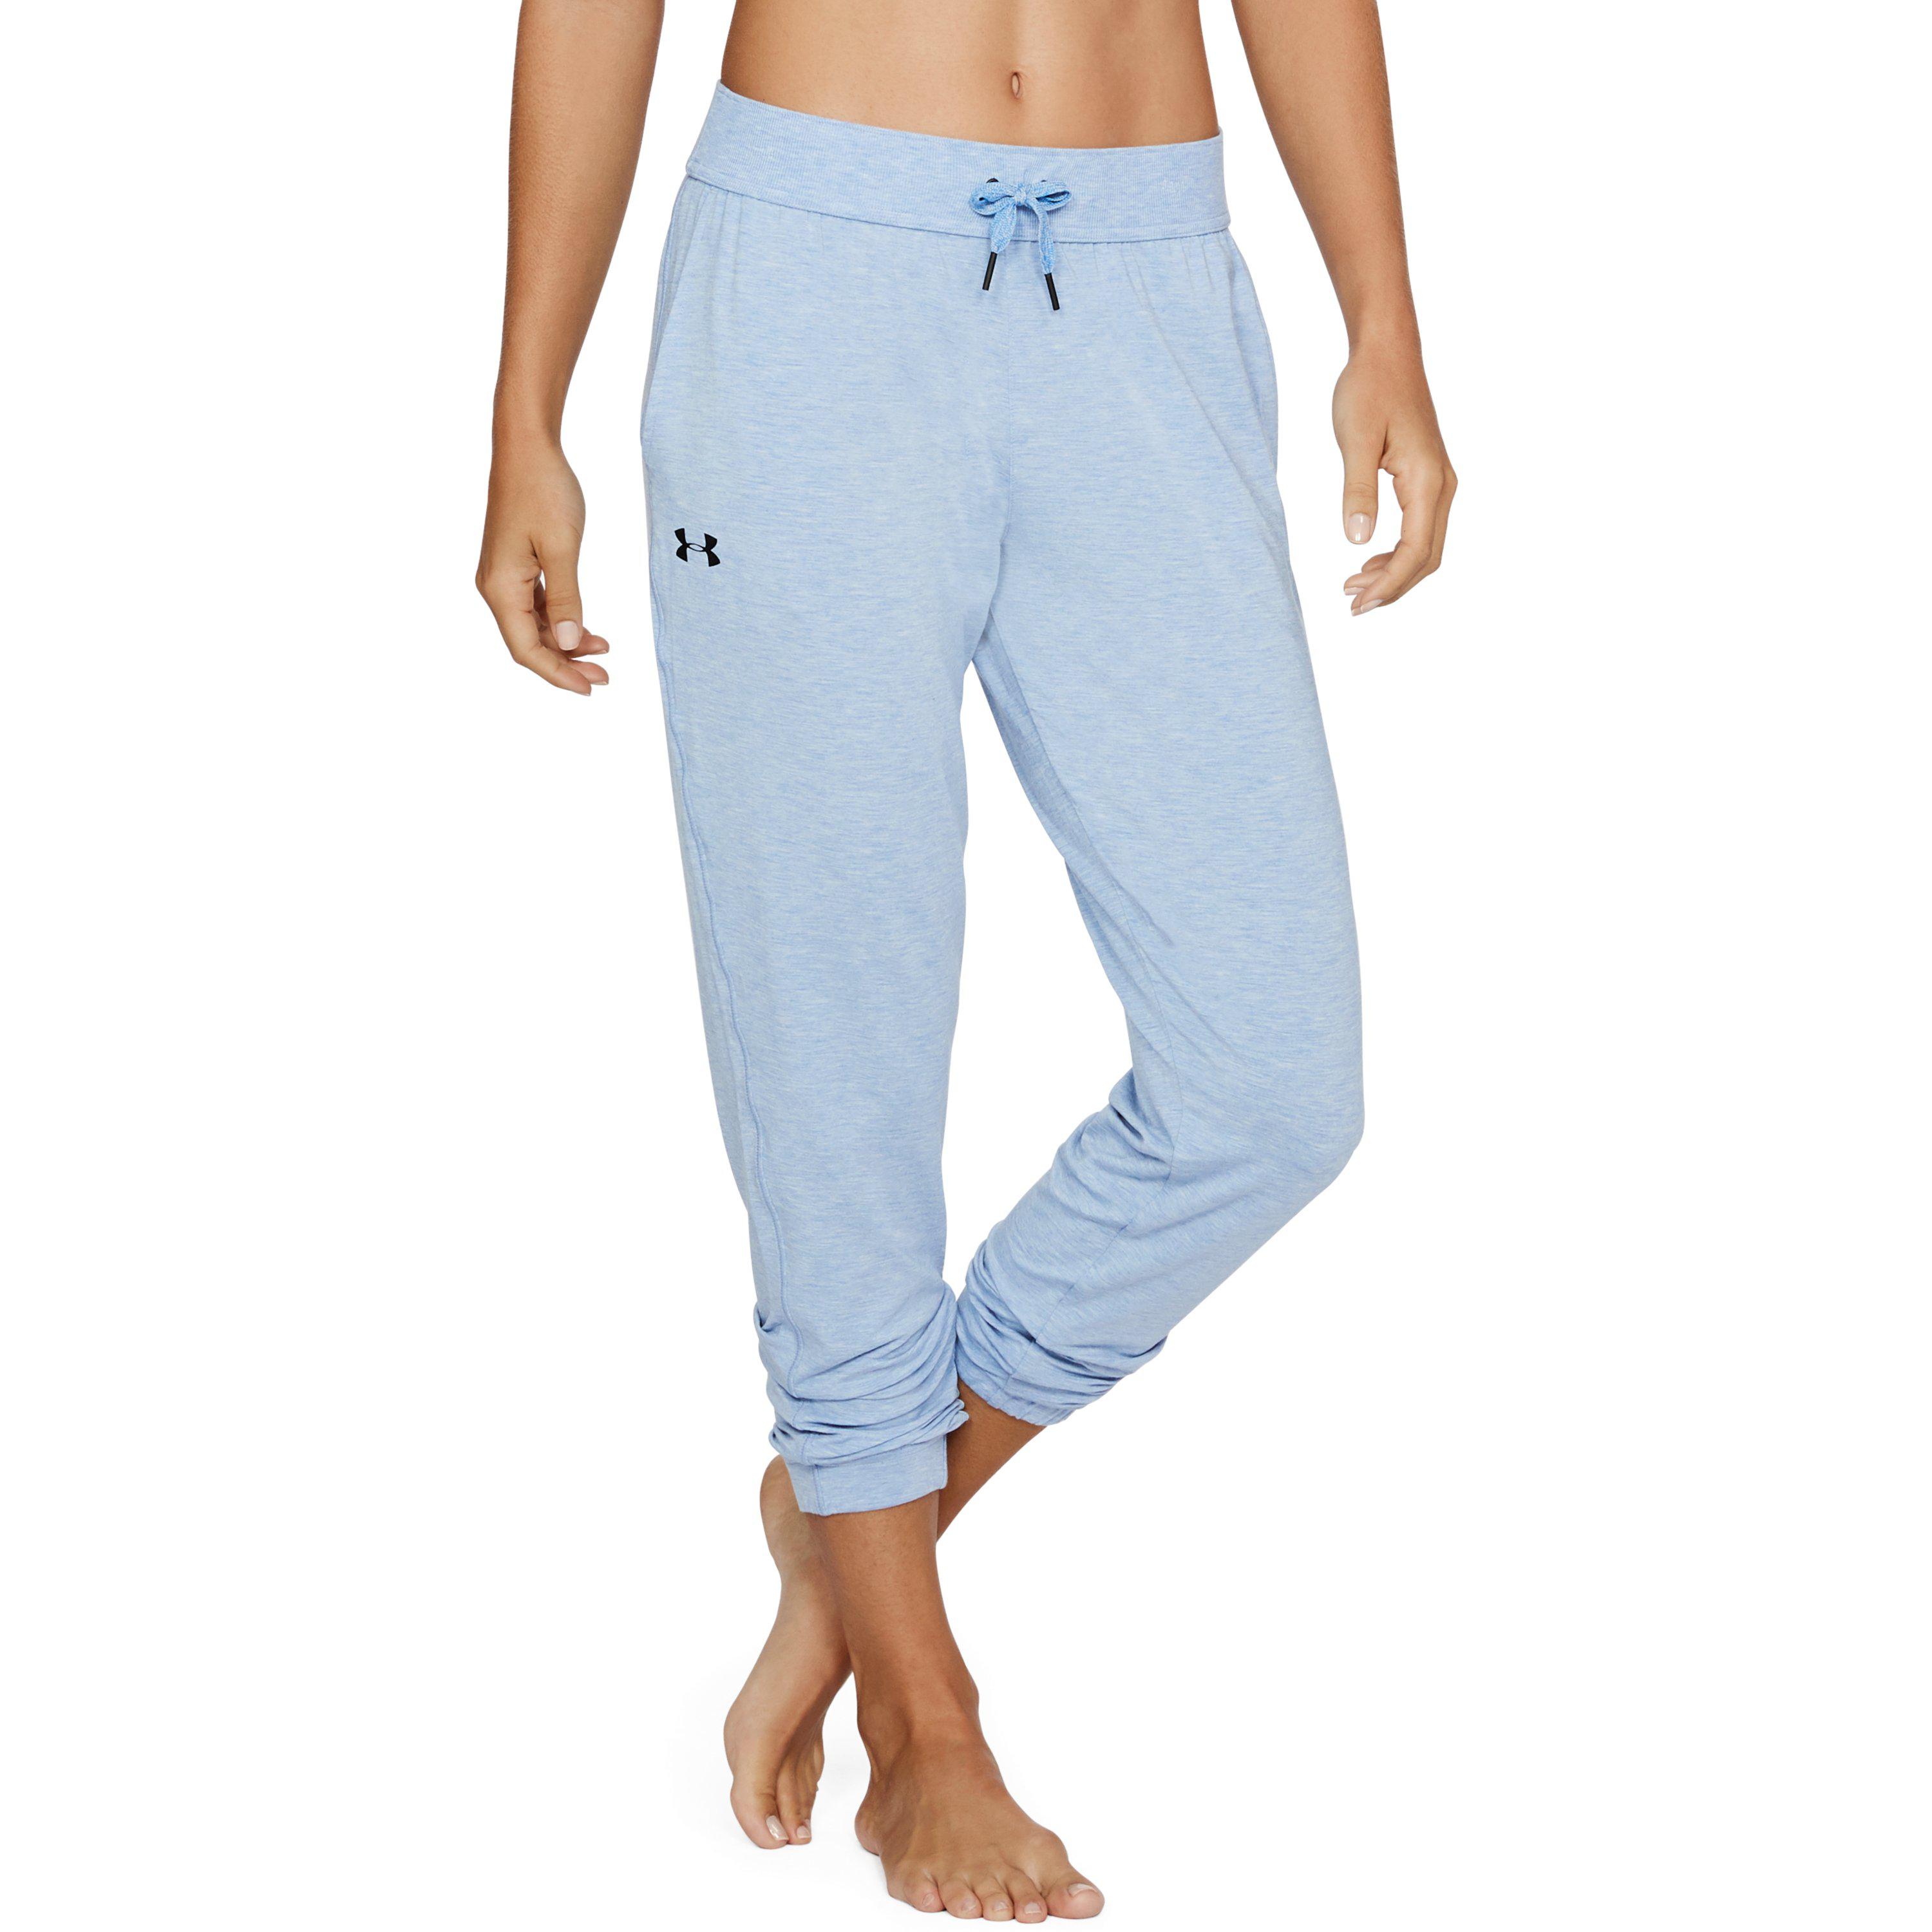 Under Armour Women's Athlete Recovery Sleepwear Pants Gray Heather NIB MSRP $65 